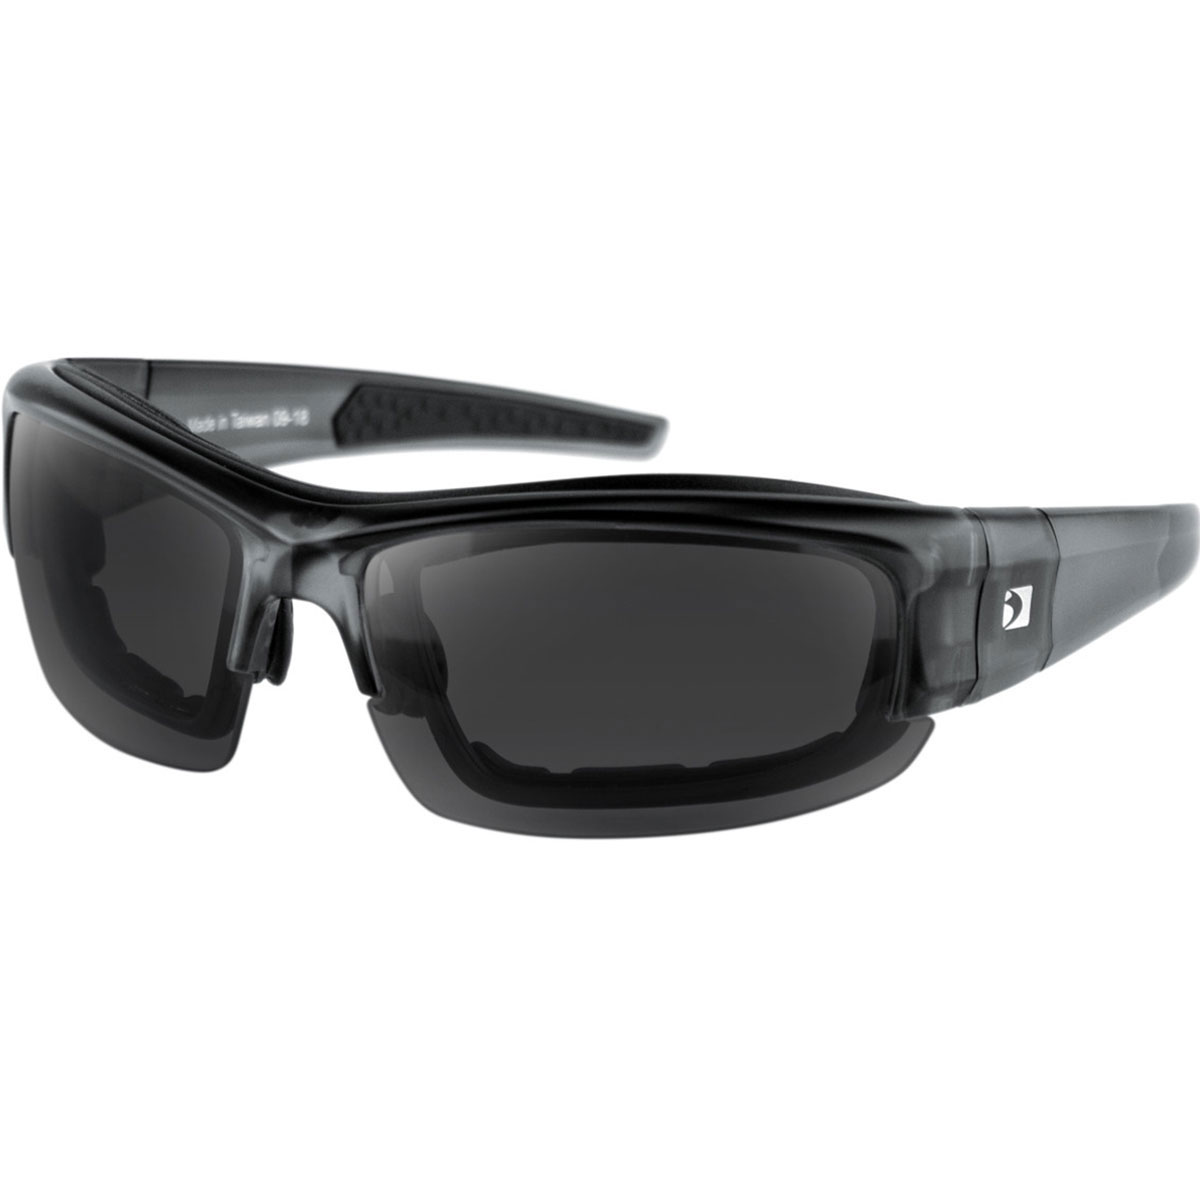 Bobster Men's Rally Convertible Sunglasses,OS,Black/Smoke - image 1 of 2